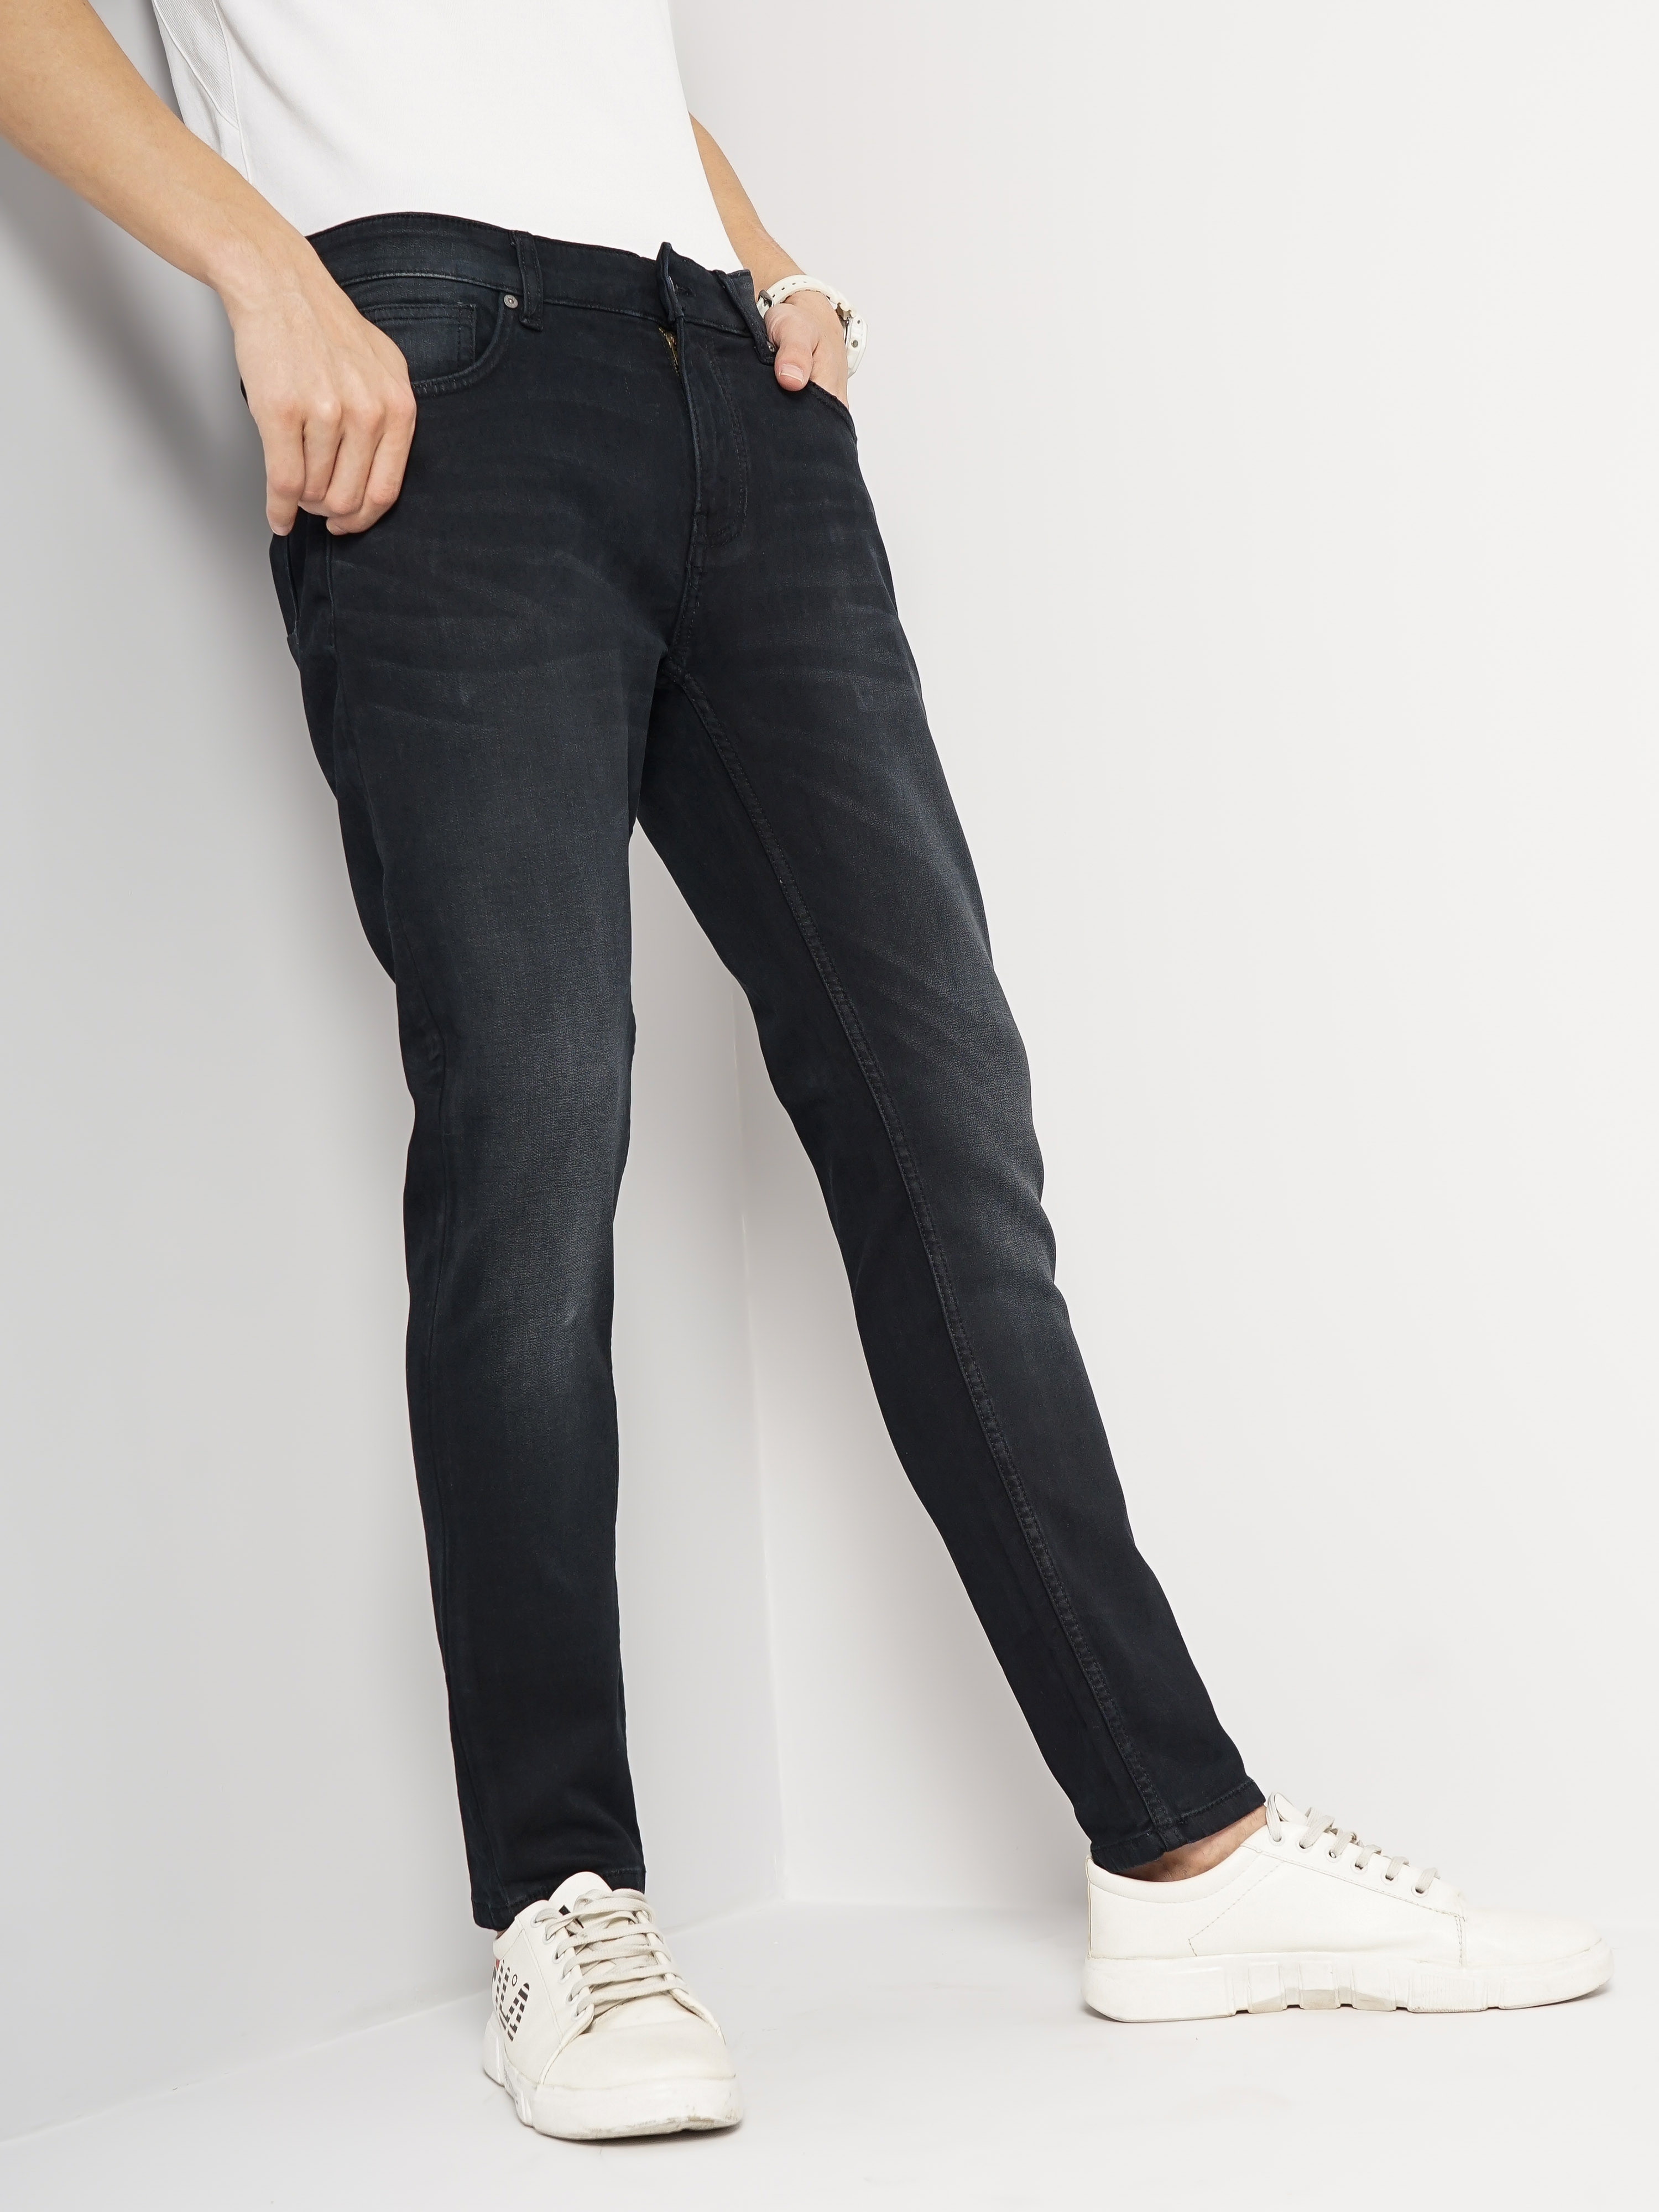 Celio Men Black Solid Skinny Fit Cotton Ankle Length Jeans